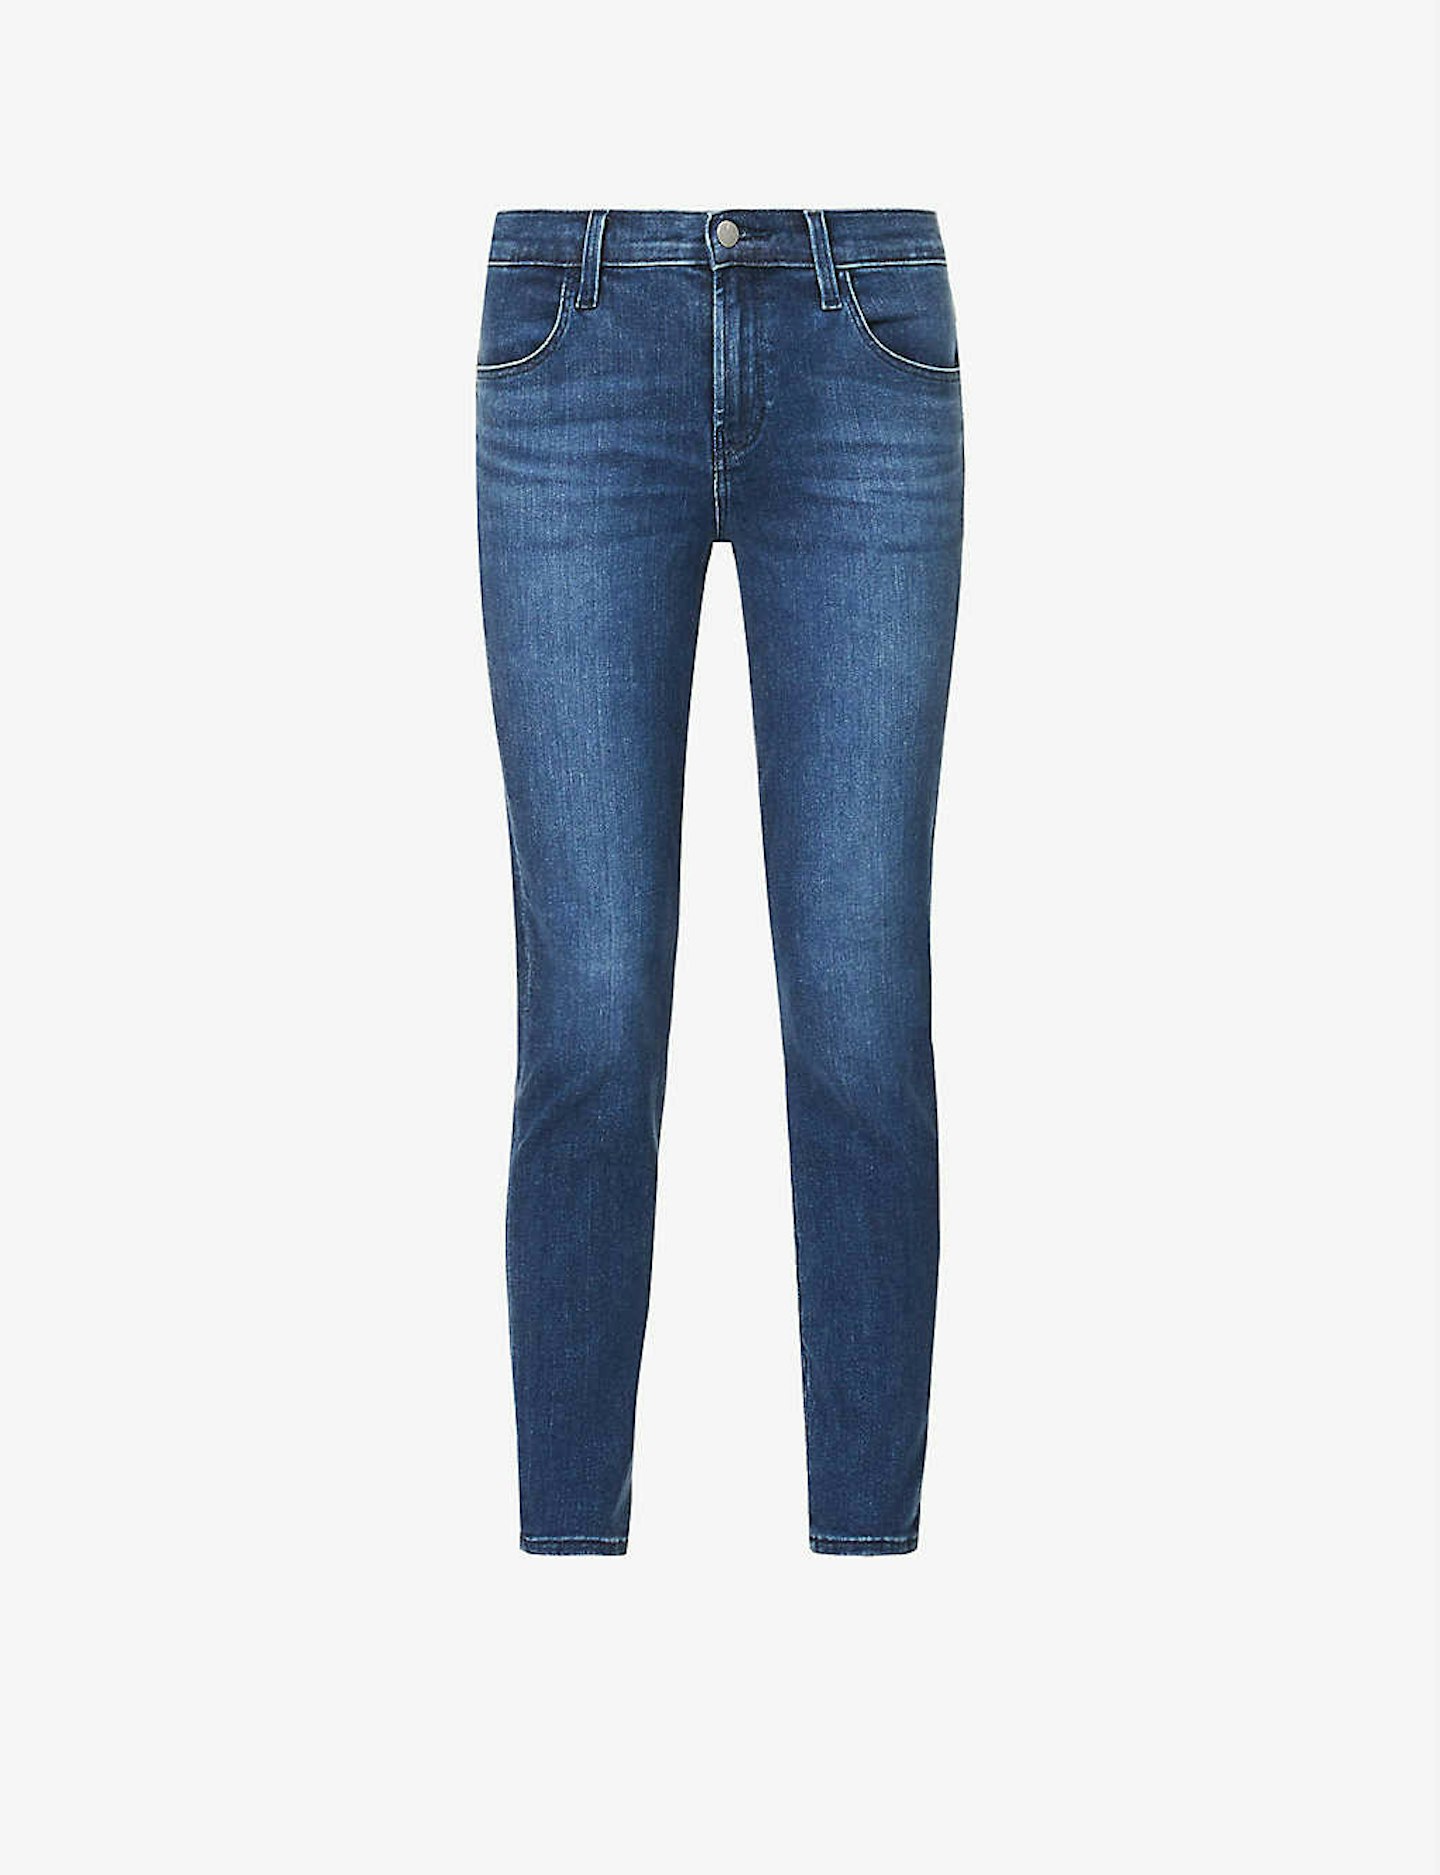 J Brand, Alana Skinny High-Rise Jeans, £255